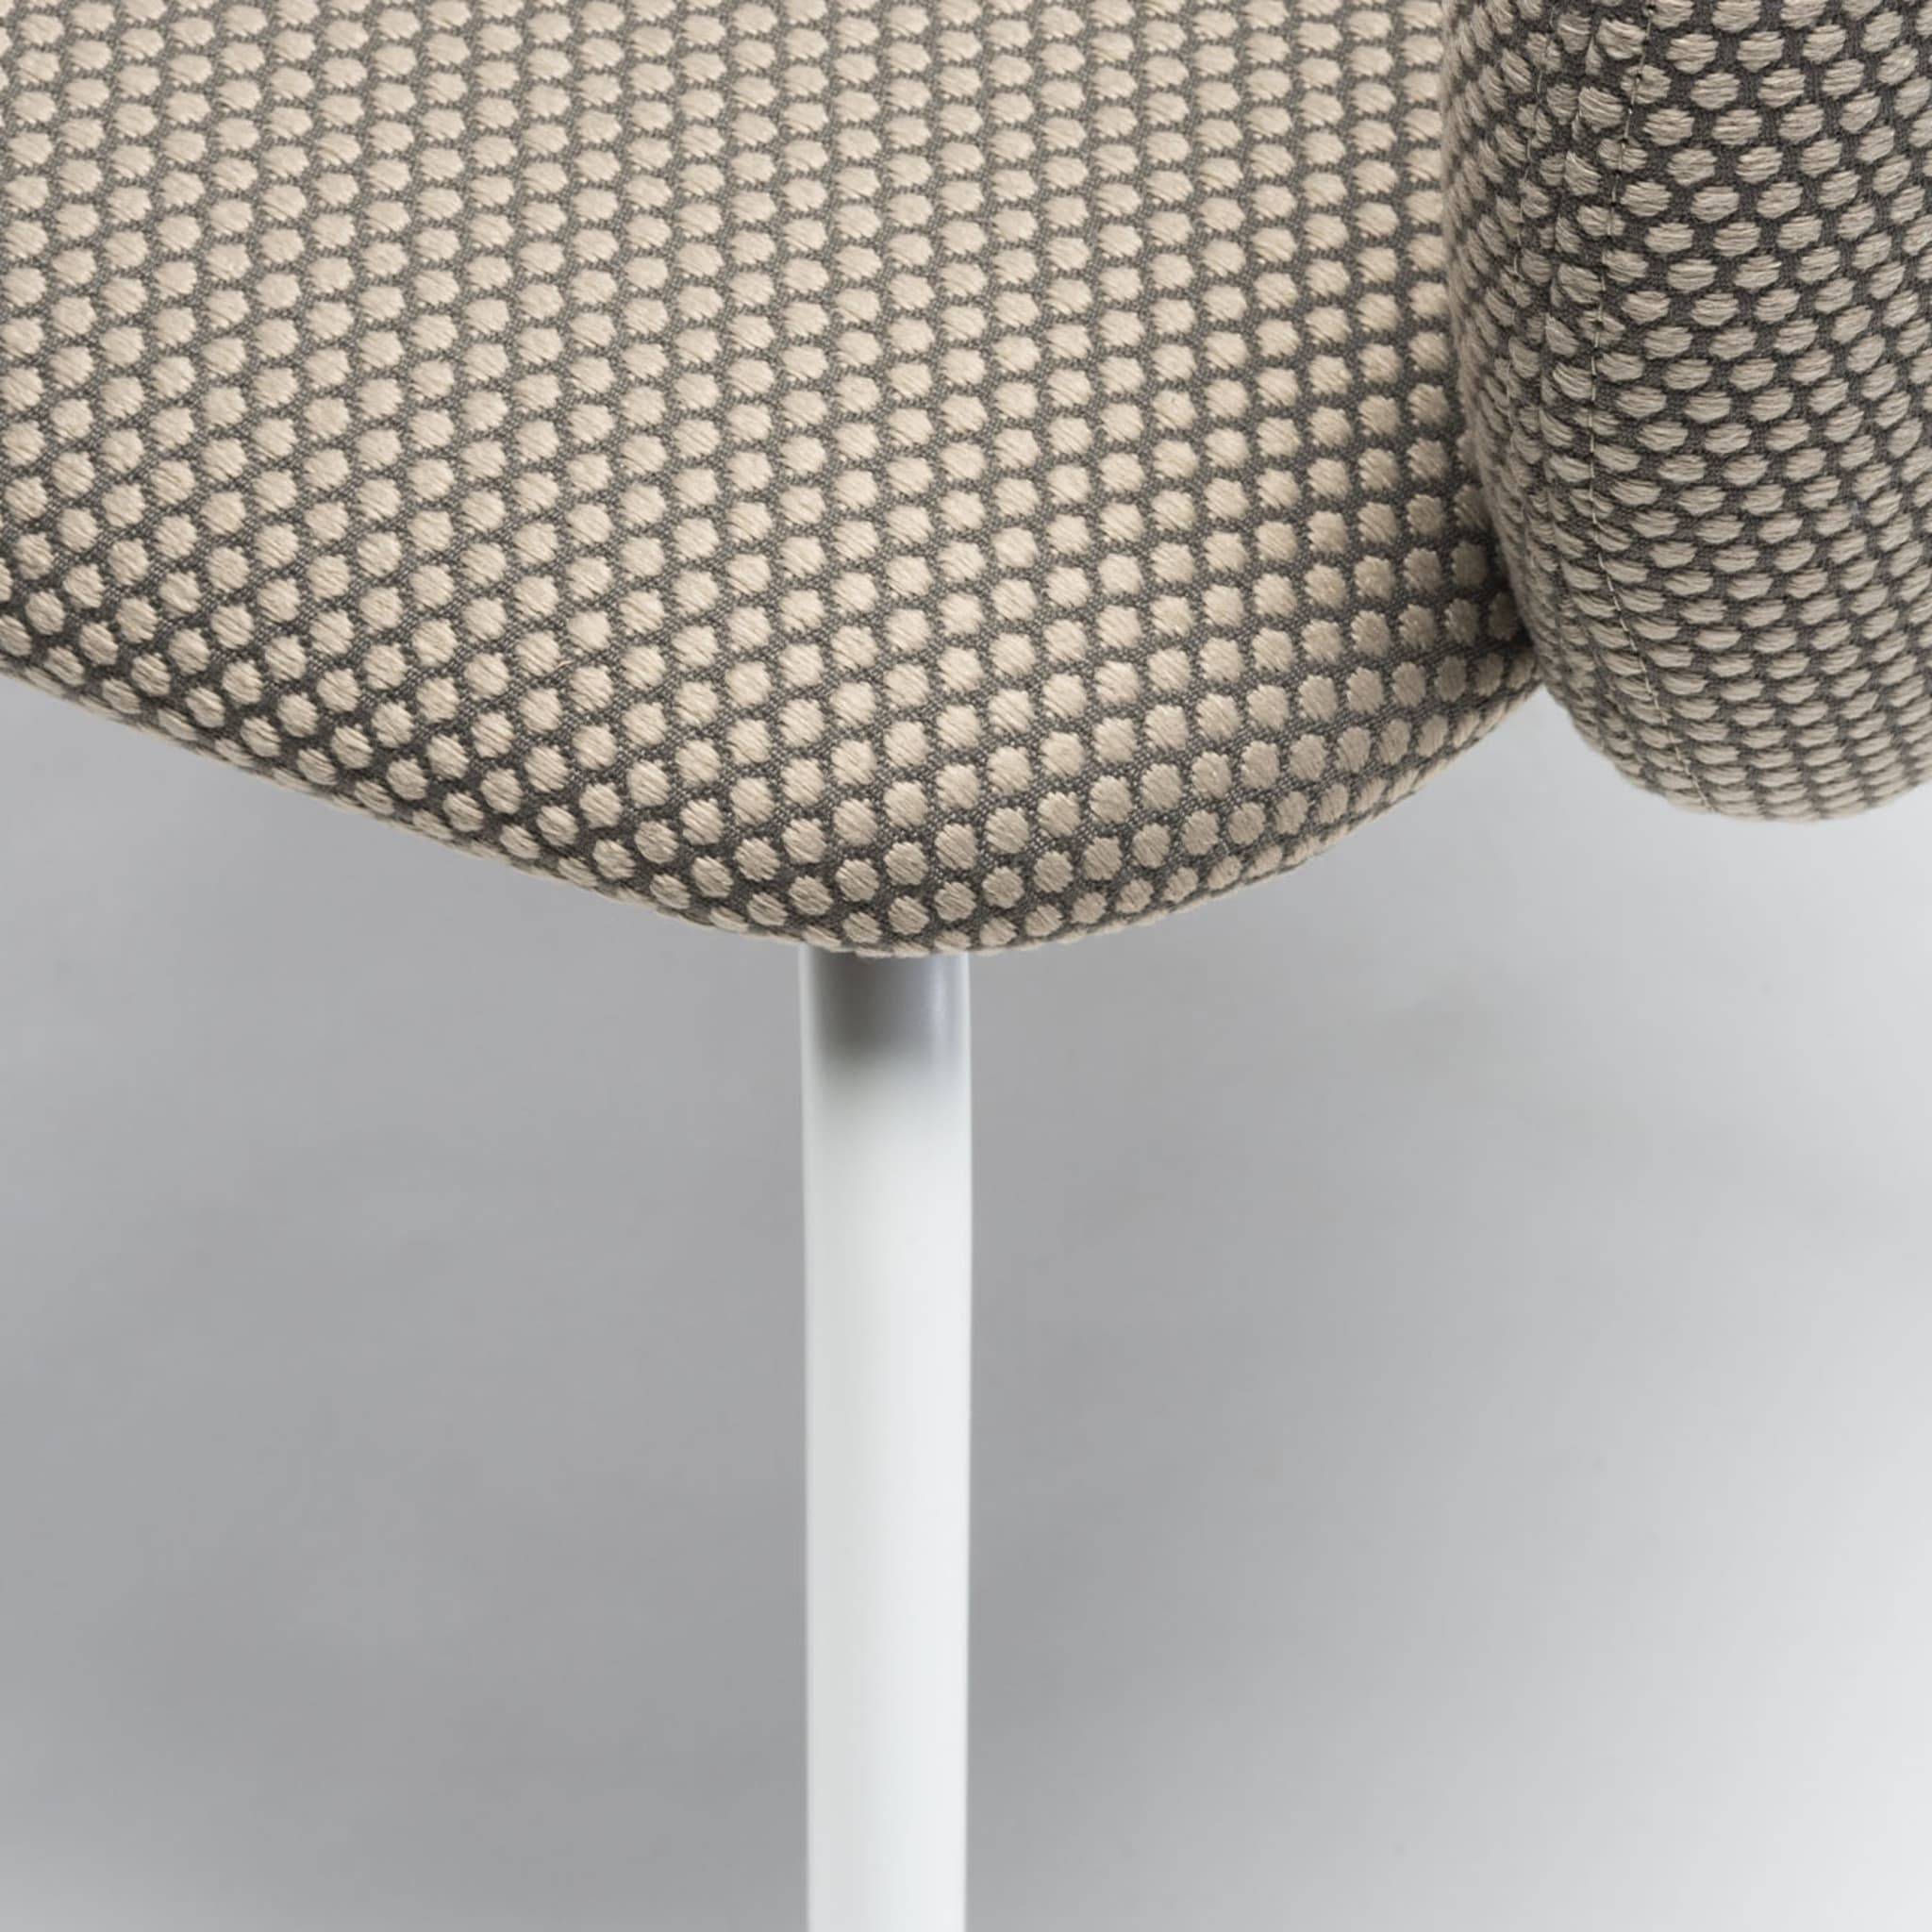 Bel M Gray Chair By Pablo Regano - Alternative view 1